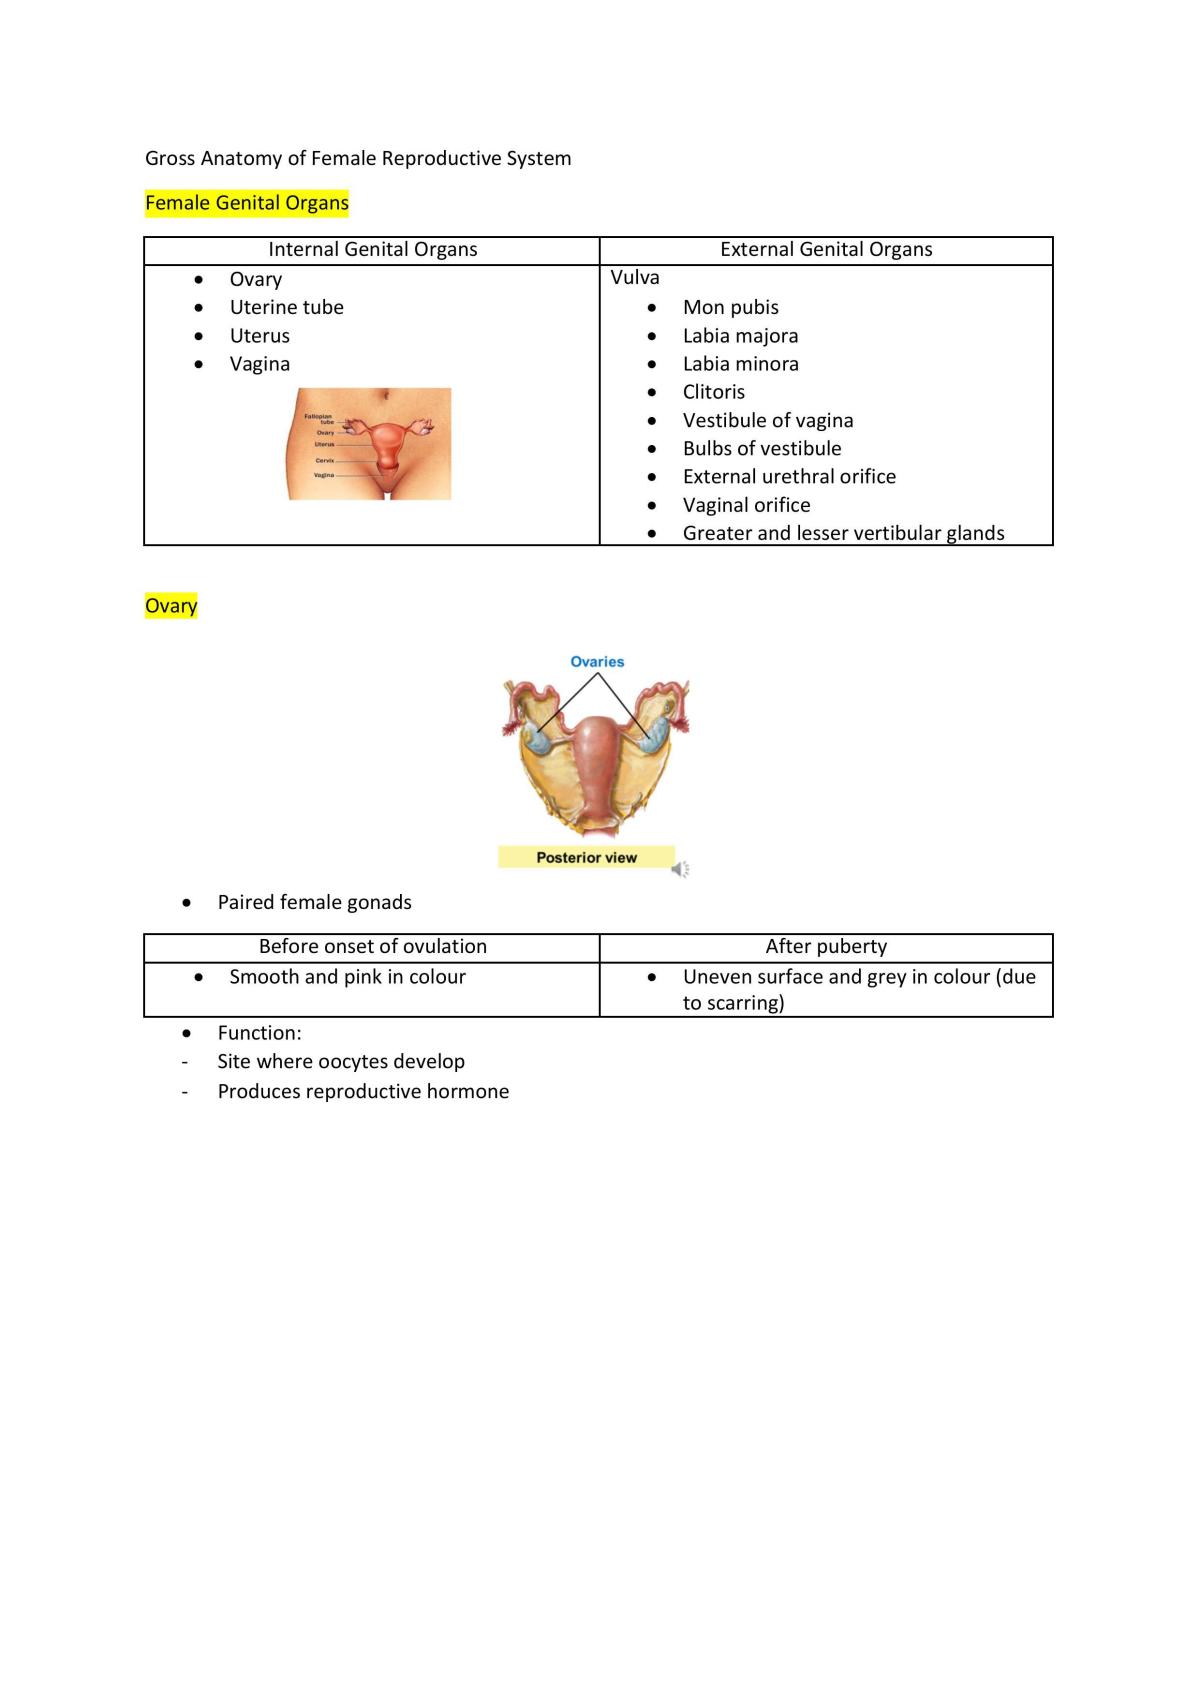 Female Reproductive Organ Anatomy: Overview, Gross Anatomy